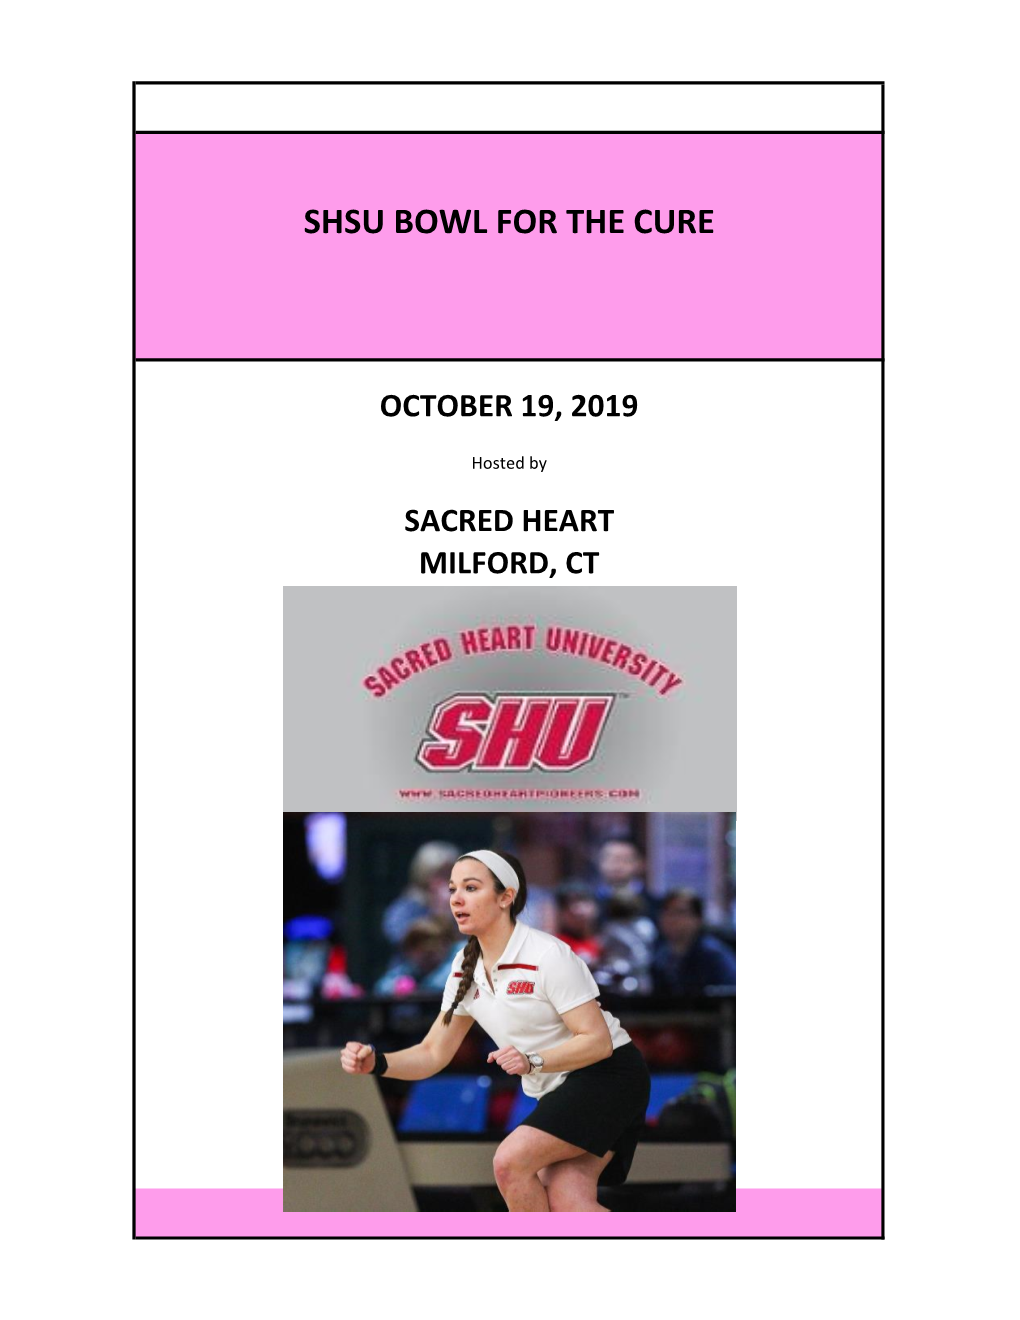 Shsu Bowl for the Cure